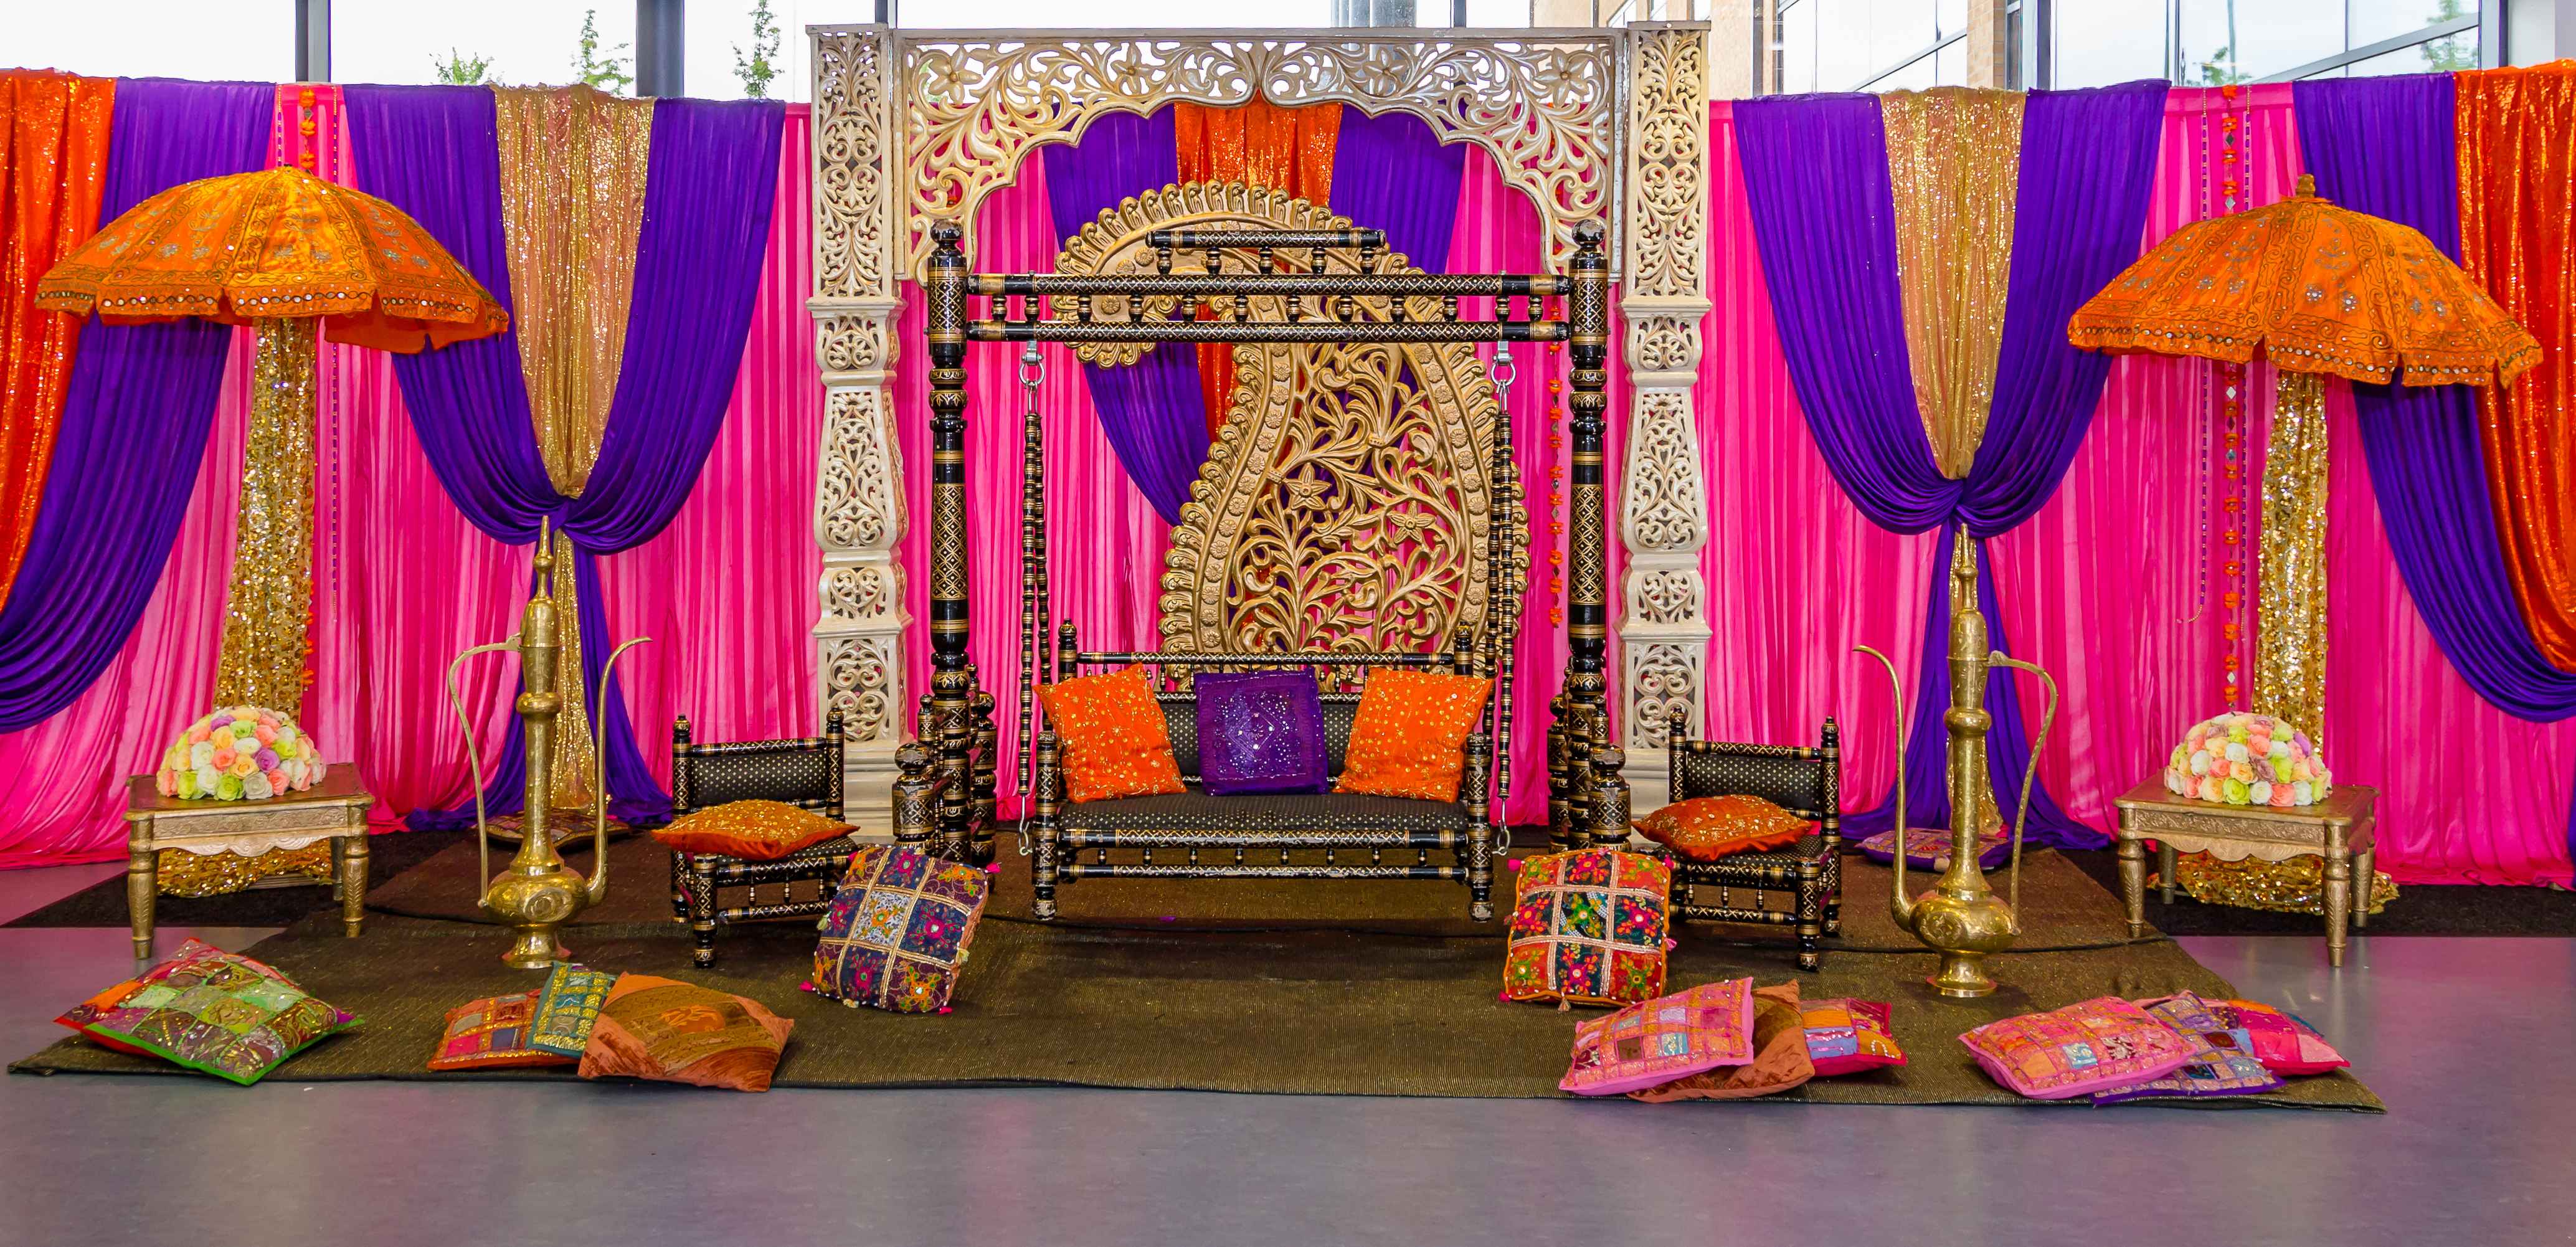 Top 50 Wedding Decorators in Chennai - Prices, Photos & Reviews